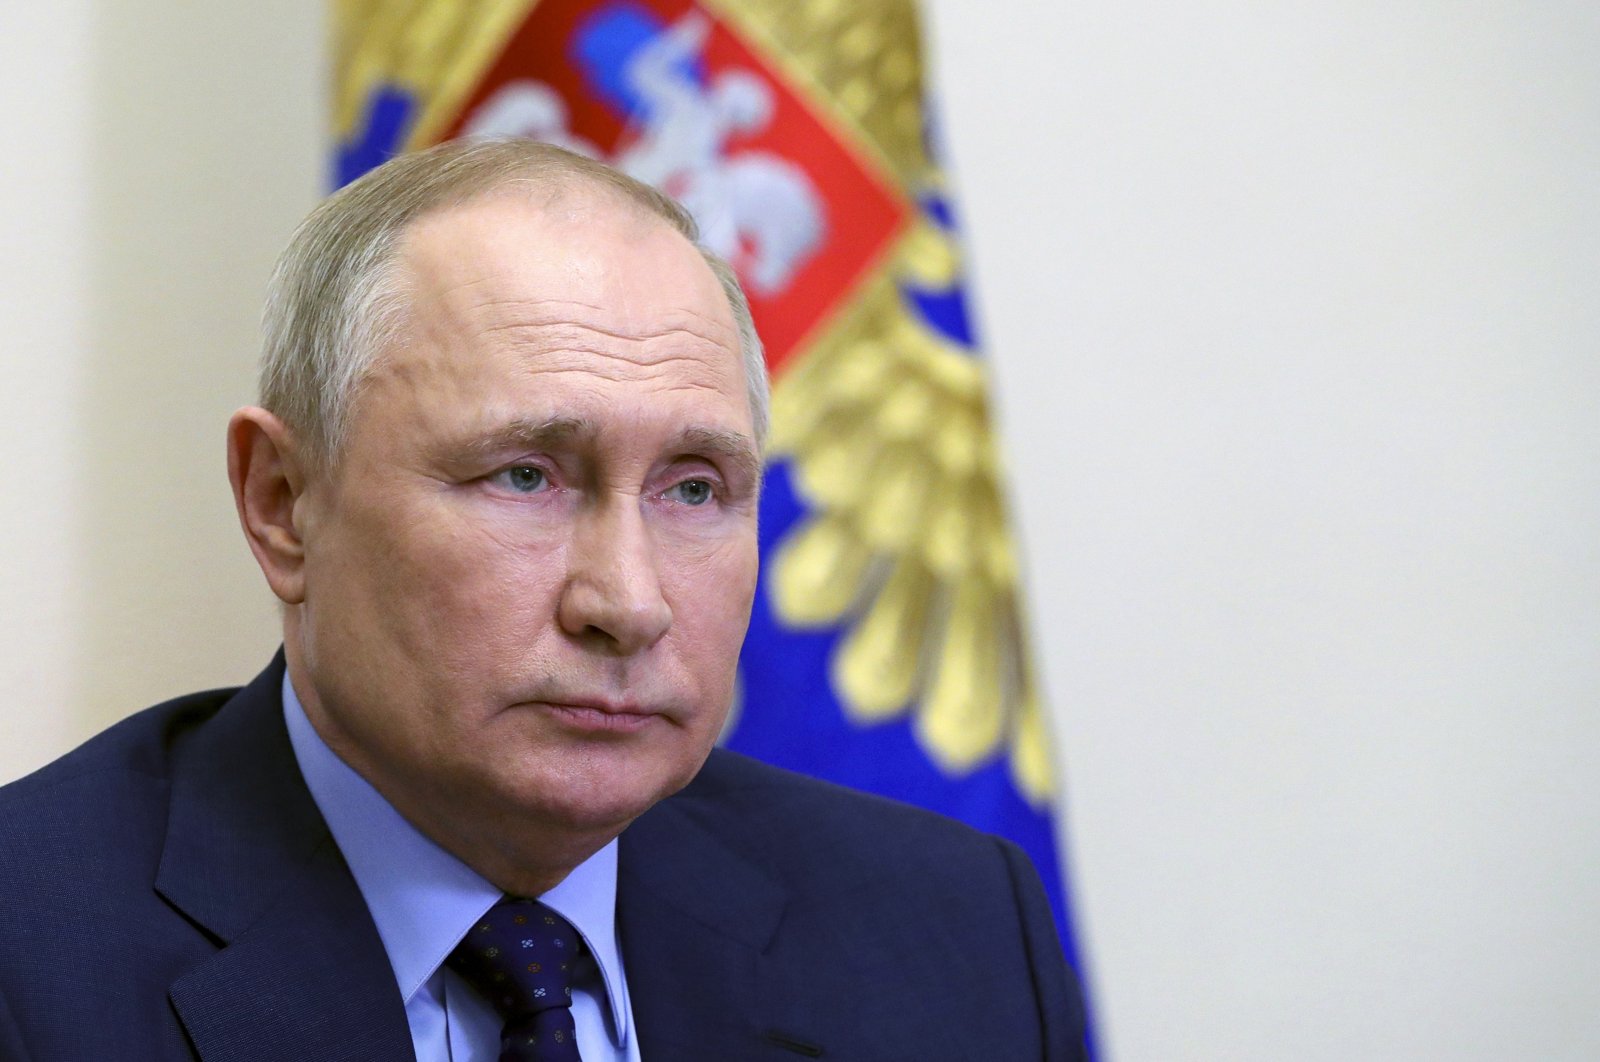 Putin mungkin mengutip perang Ukraina untuk mencampuri politik AS: Intelijen